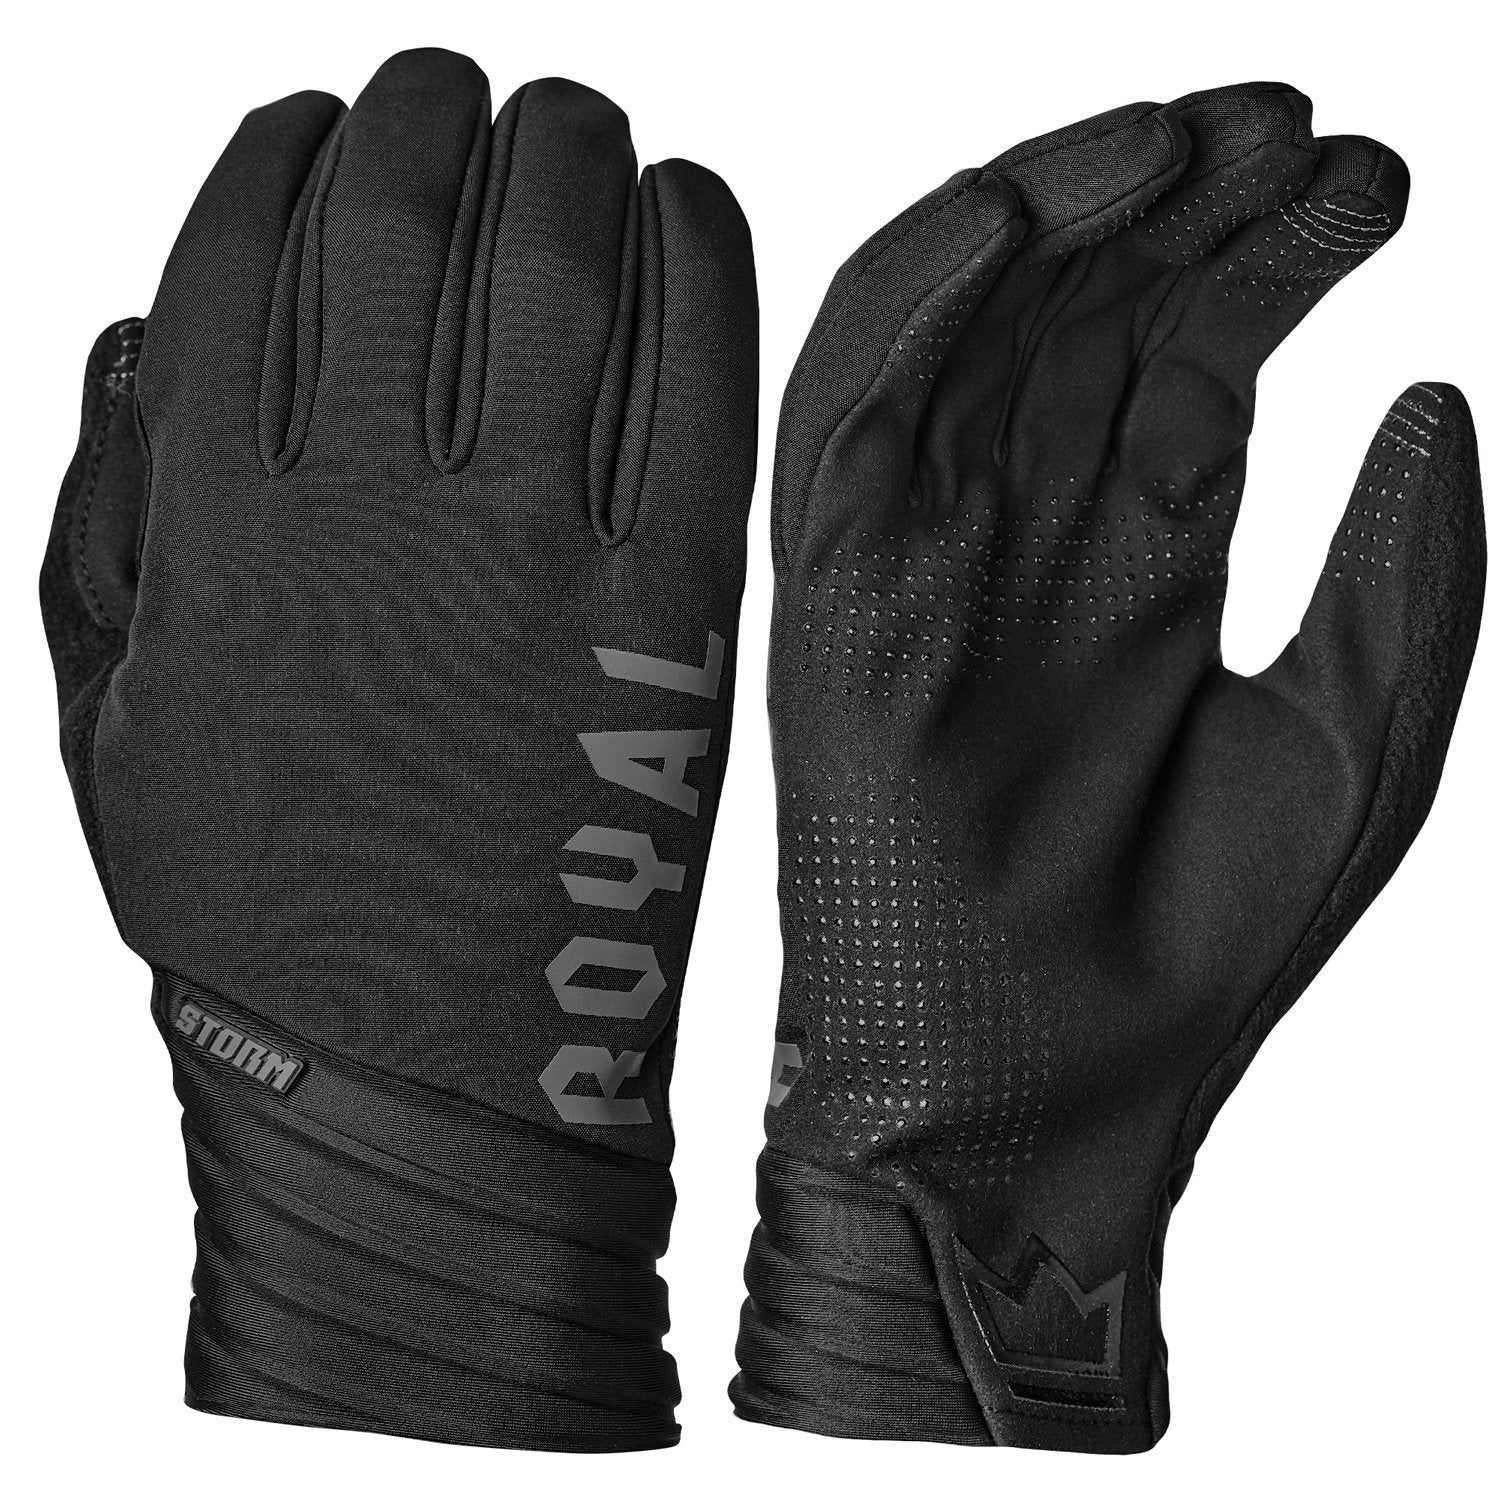 Royal Racing Storm Gloves Black Pair